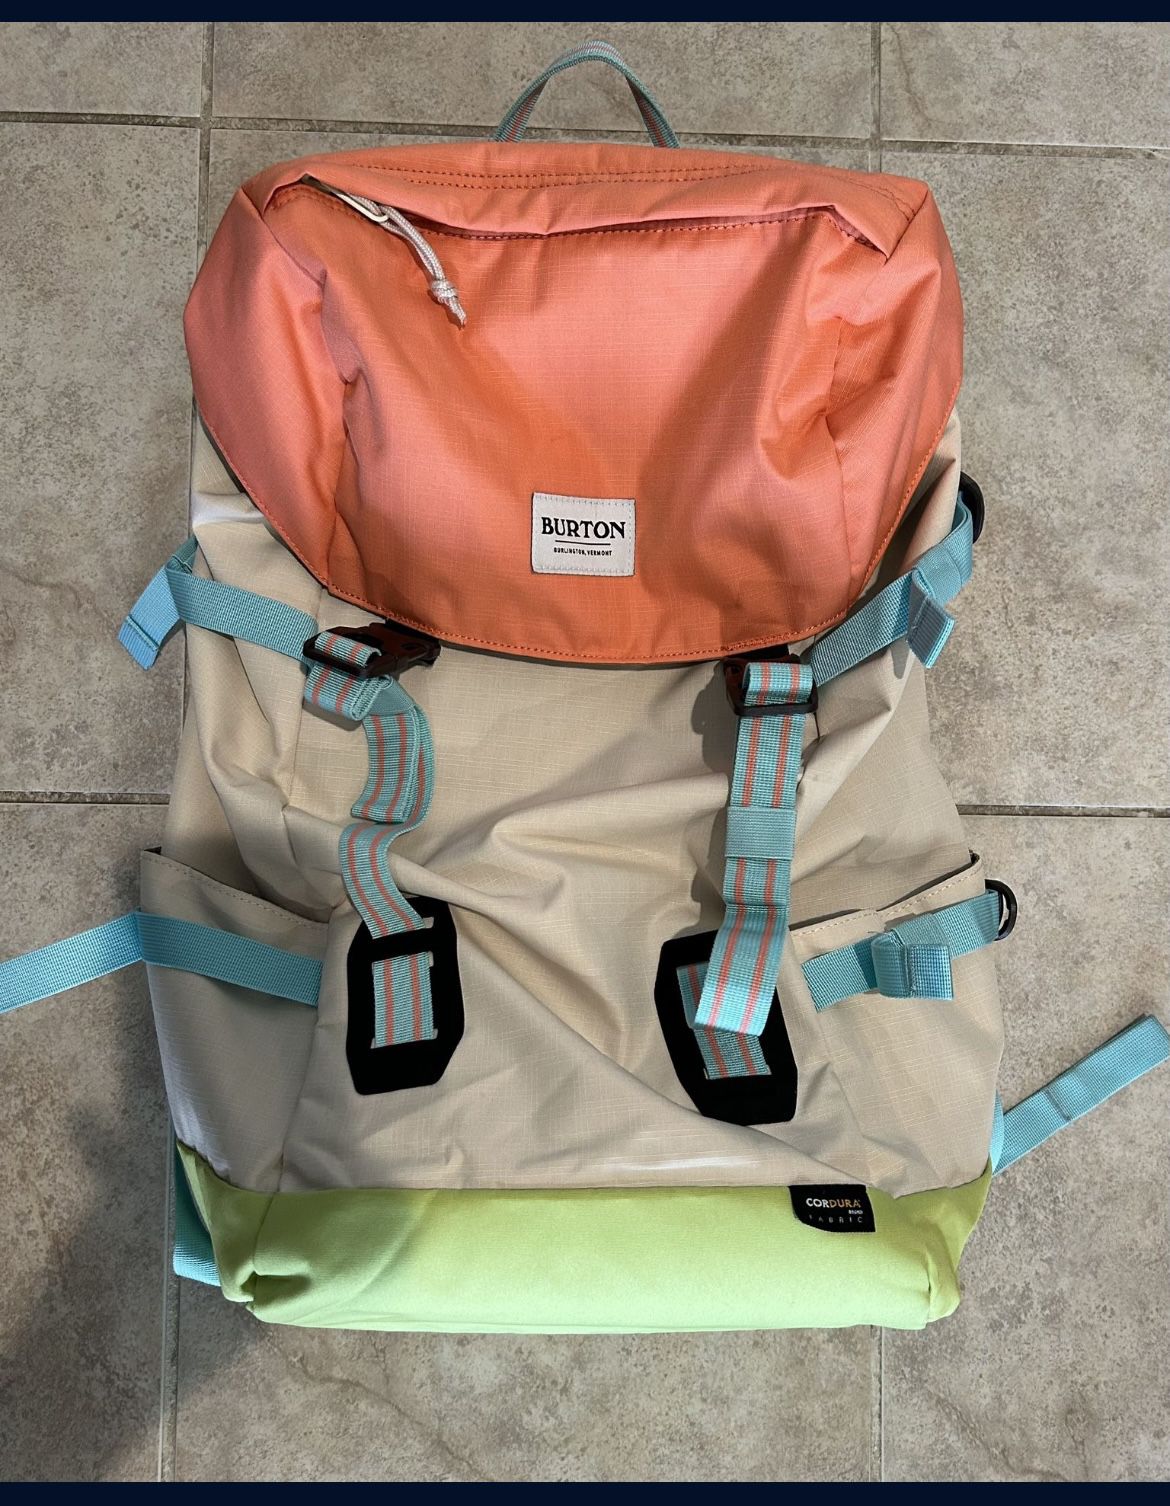 BURTON 30L backpack